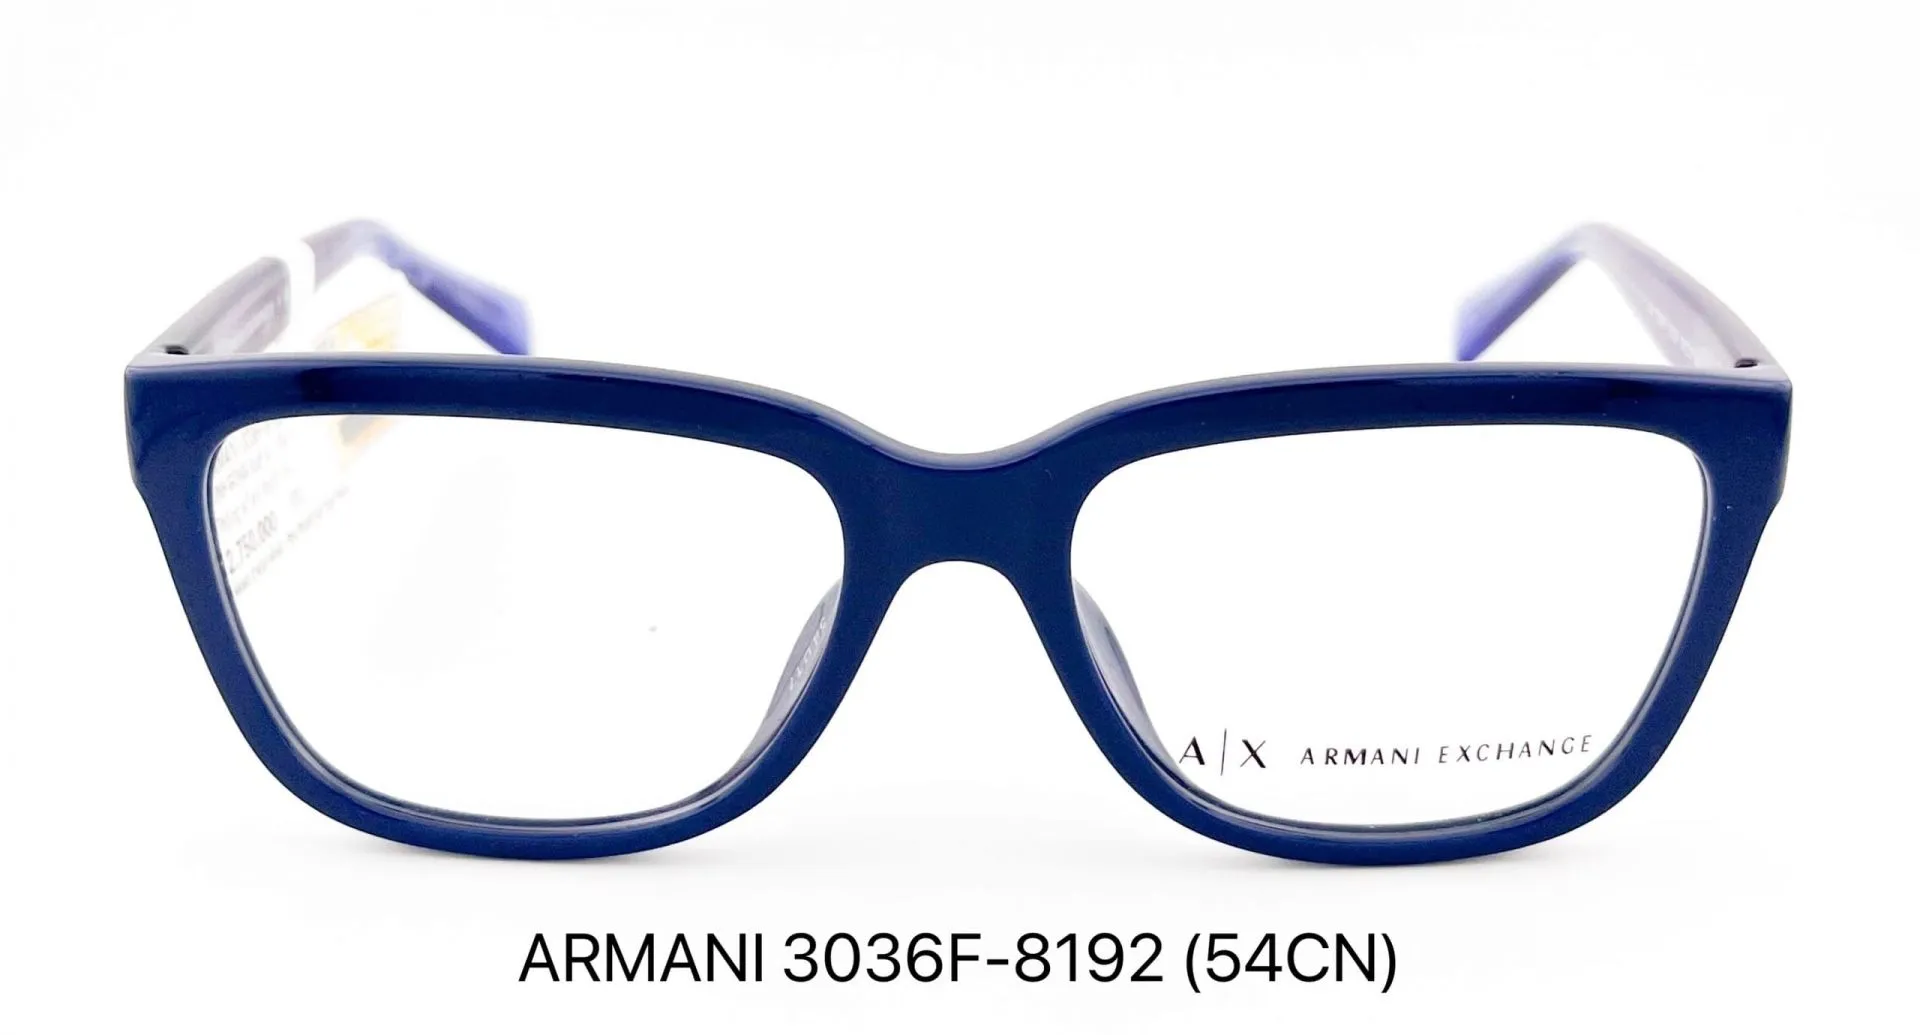 Gọng kính ARMANI EXCHANGE 3036F-8192 (54CN)